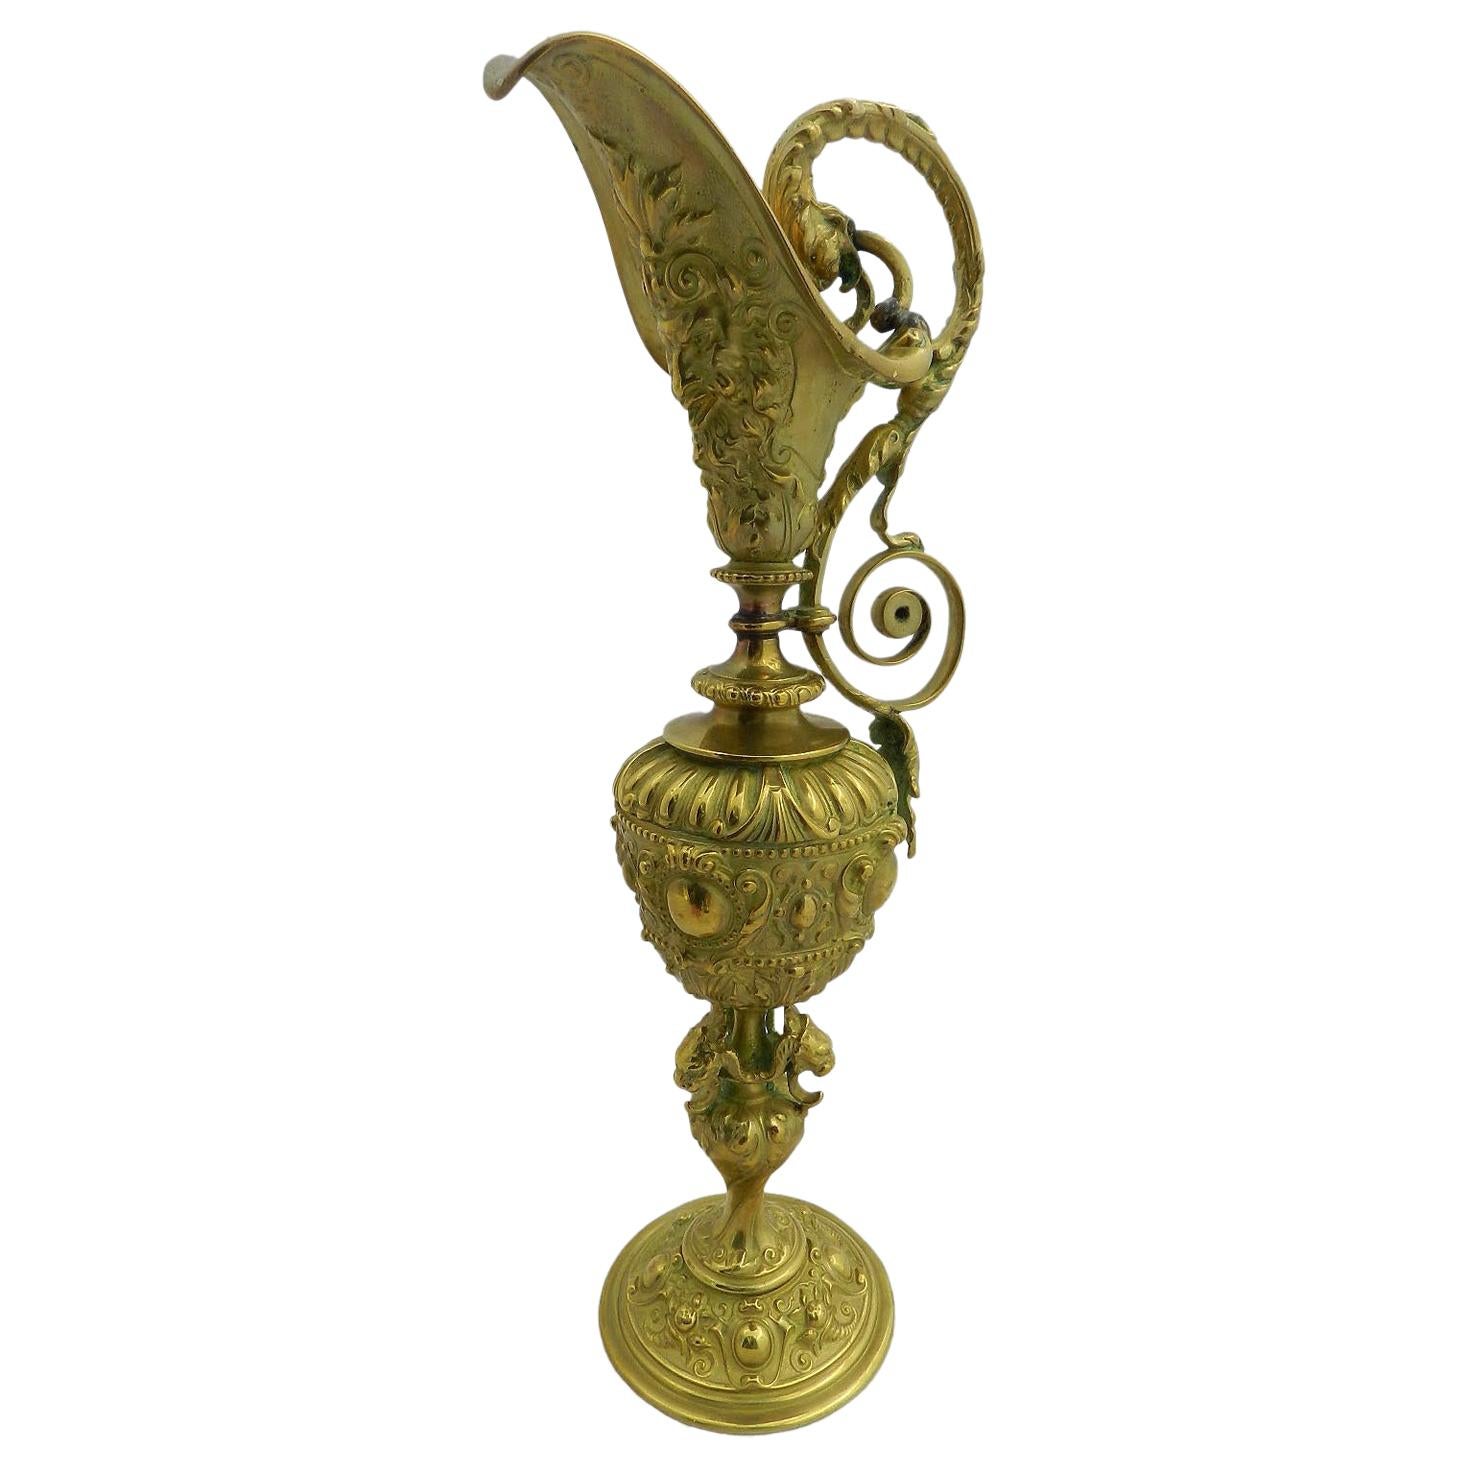 19th Century Gilt Bronze Ewer Classical Renaissance Decorative Pitcher